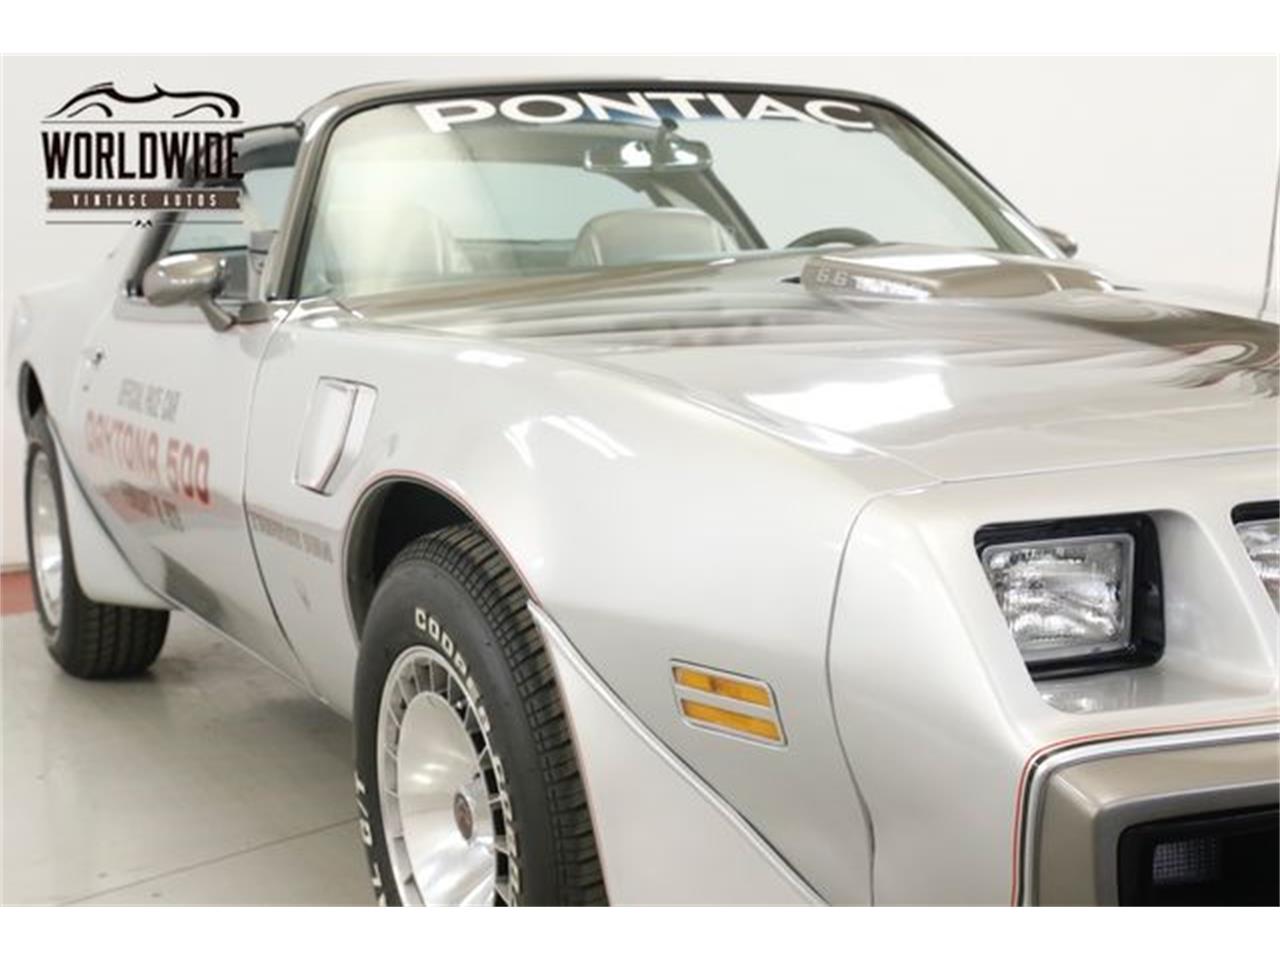 Pontiac Firebird Trans Am 1979 prix tout compris